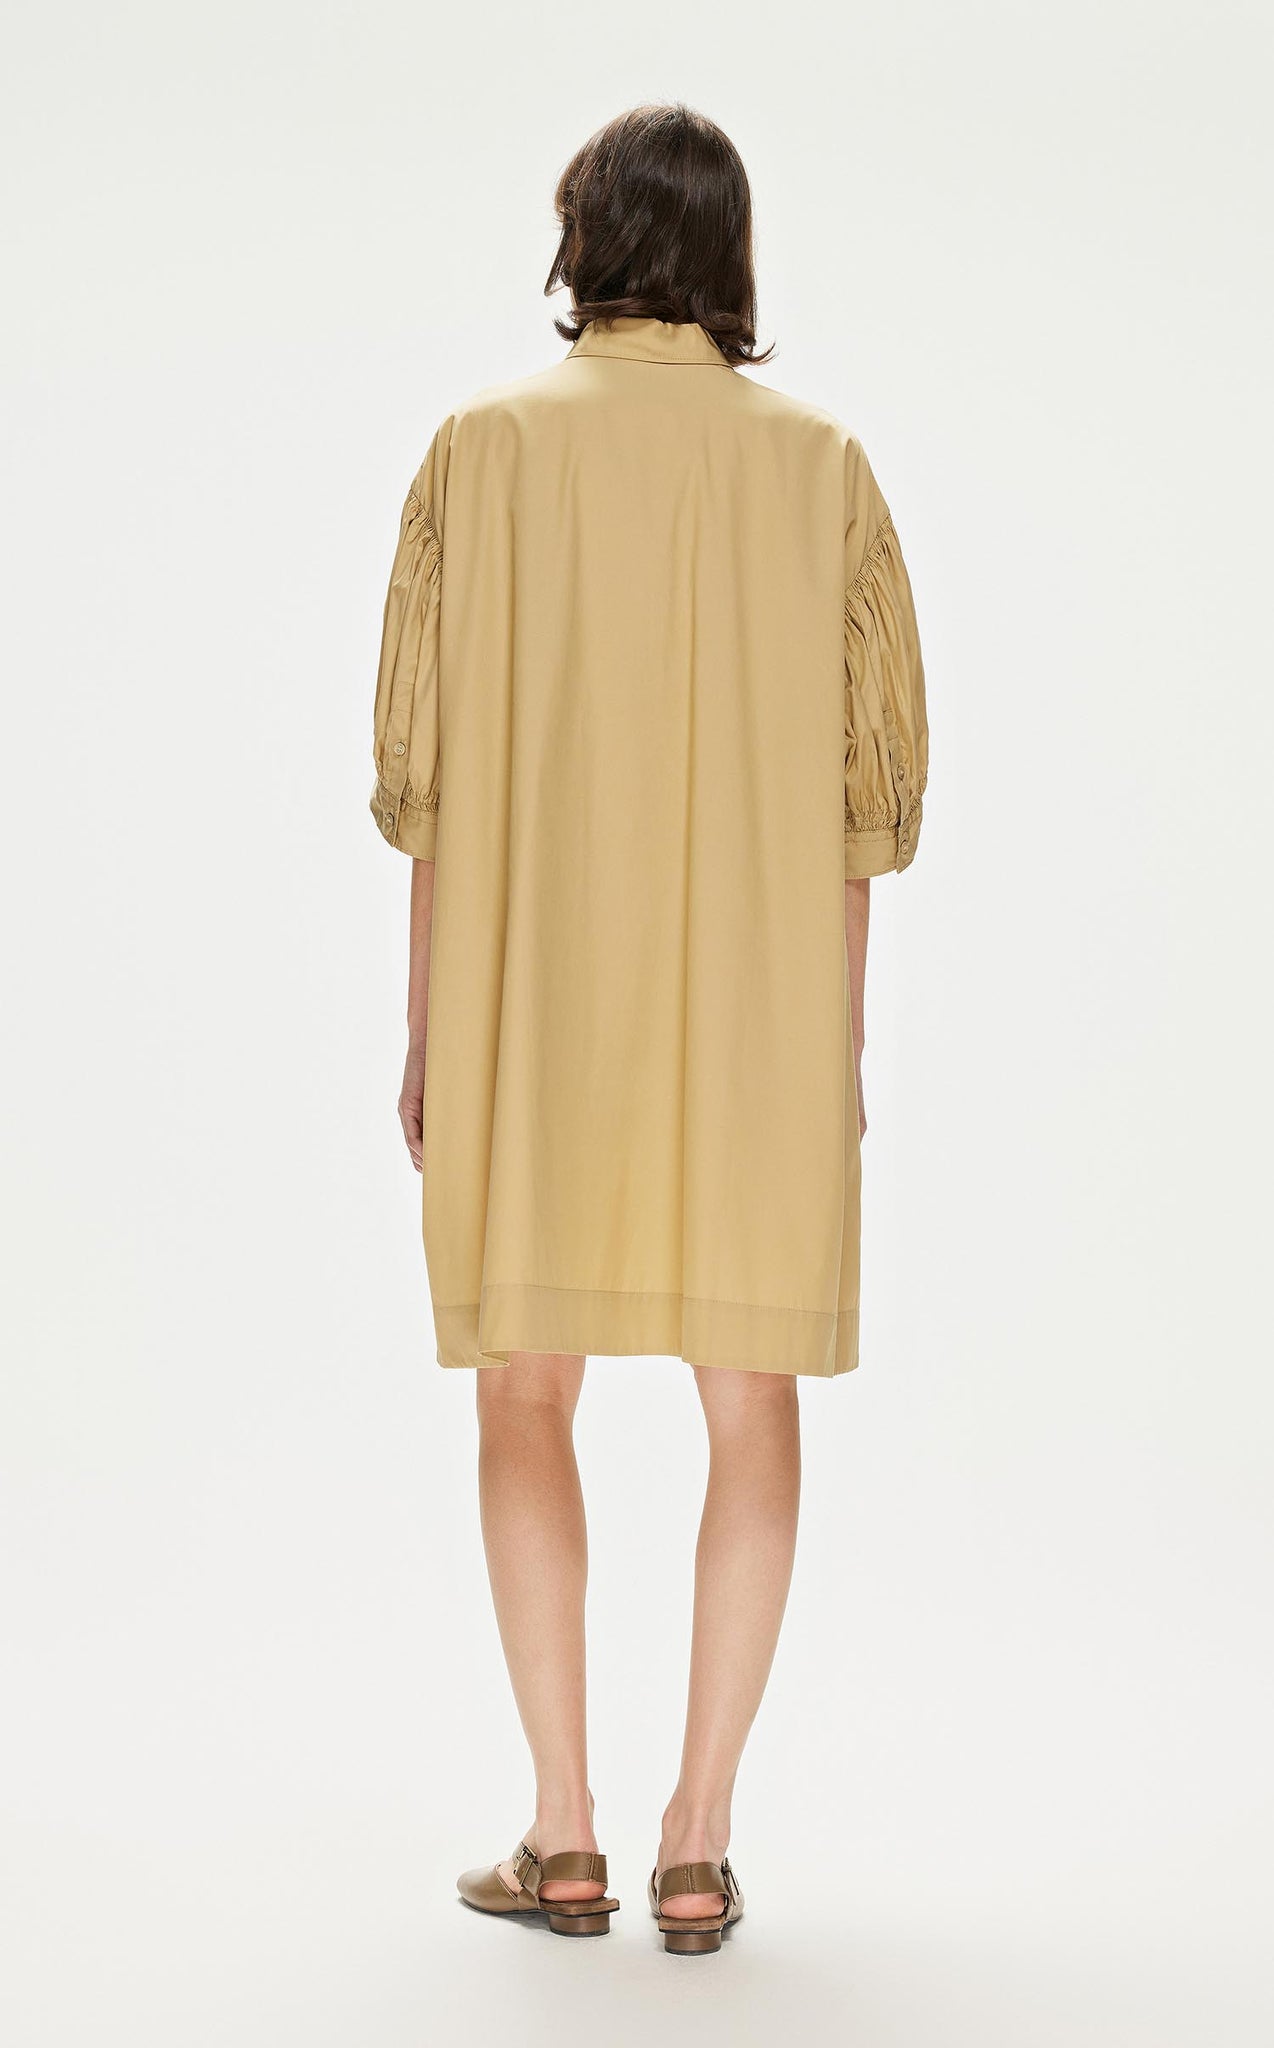 Dresses / JNBY Loose Fit Short Sleeve Dress (100% Cotton)